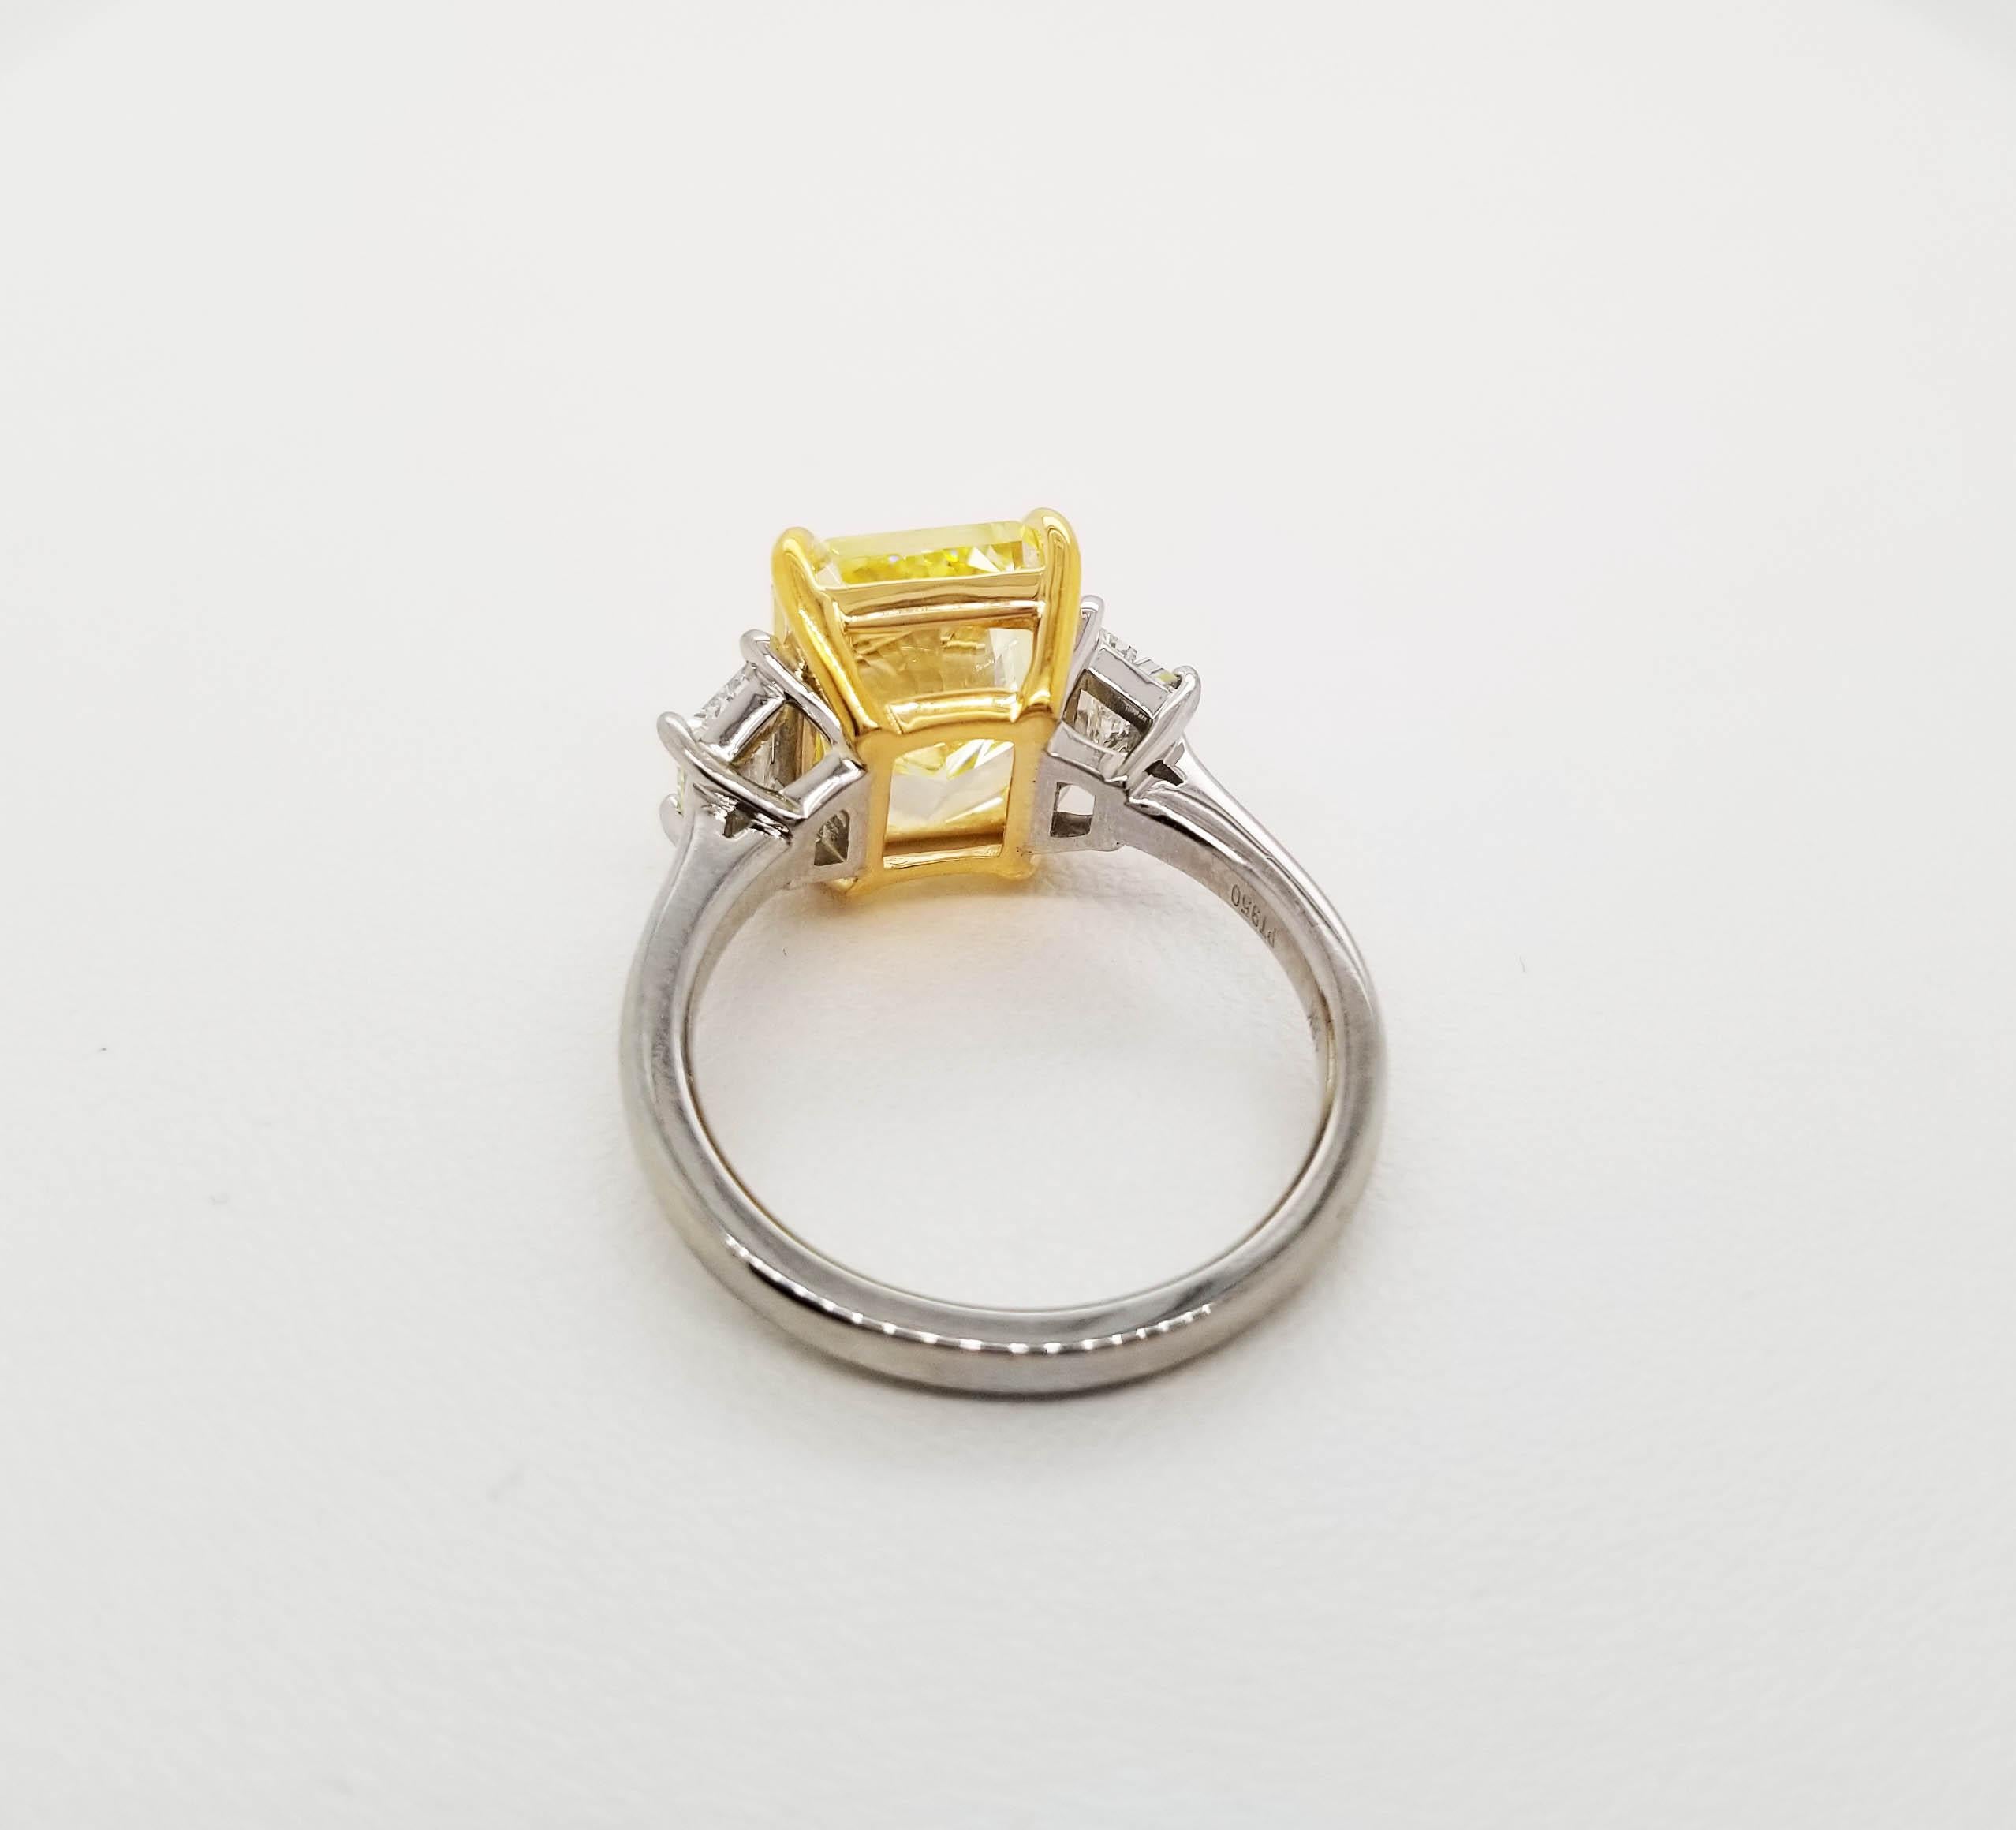 Radiant Cut Scarselli 5 Carat Fancy Intense Yellow Diamond Engagement Ring in Platinum